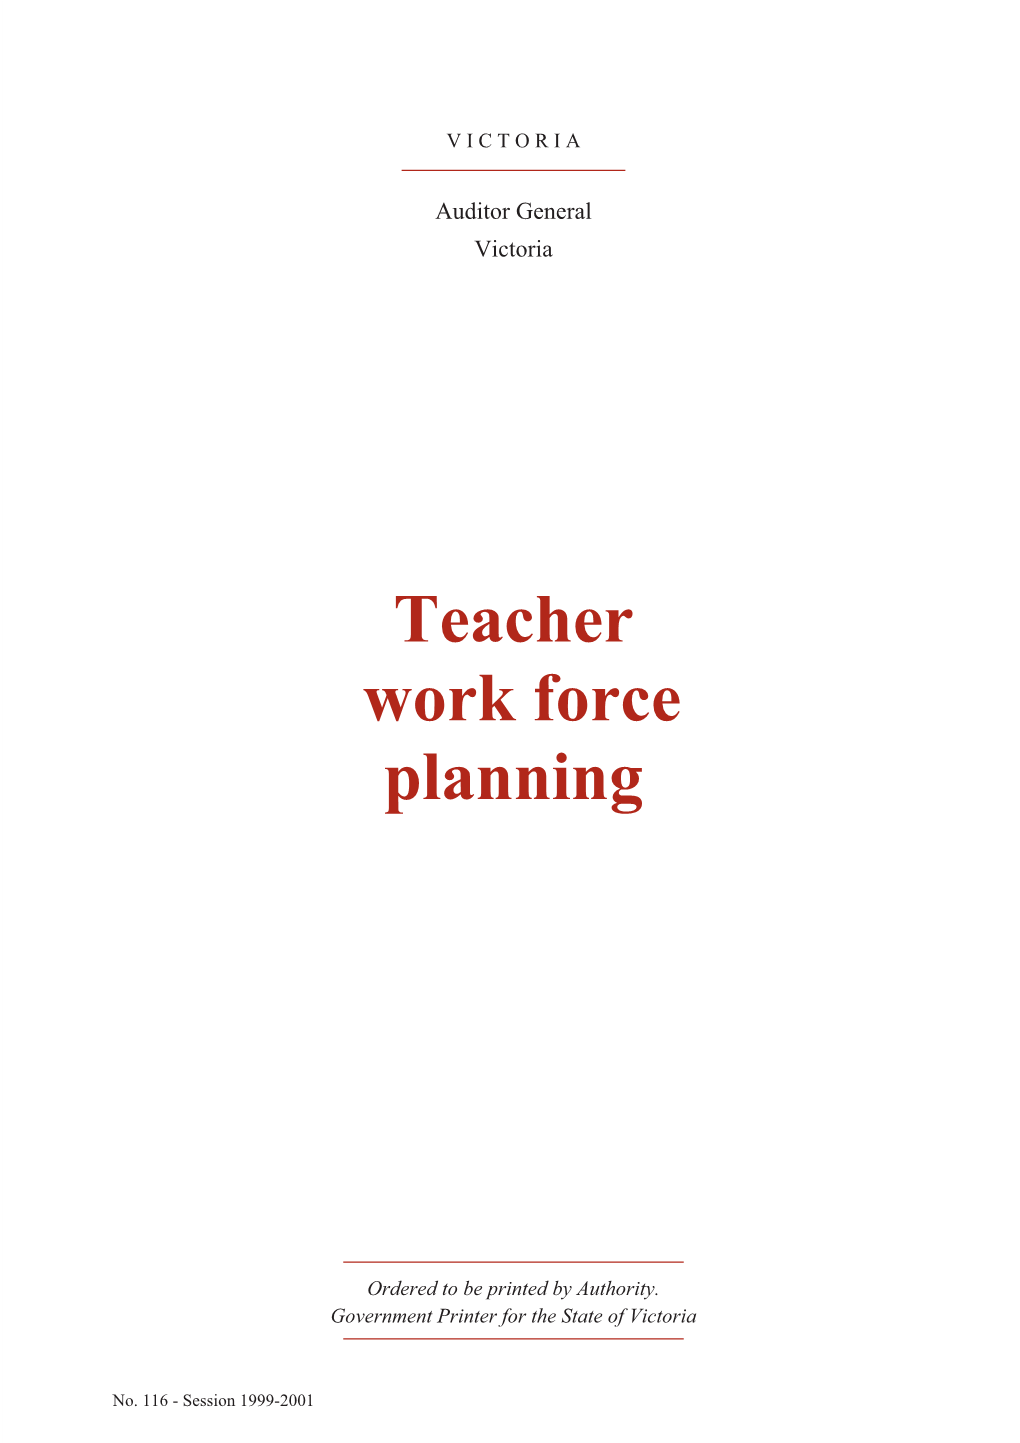 Teacher Work Force Planning